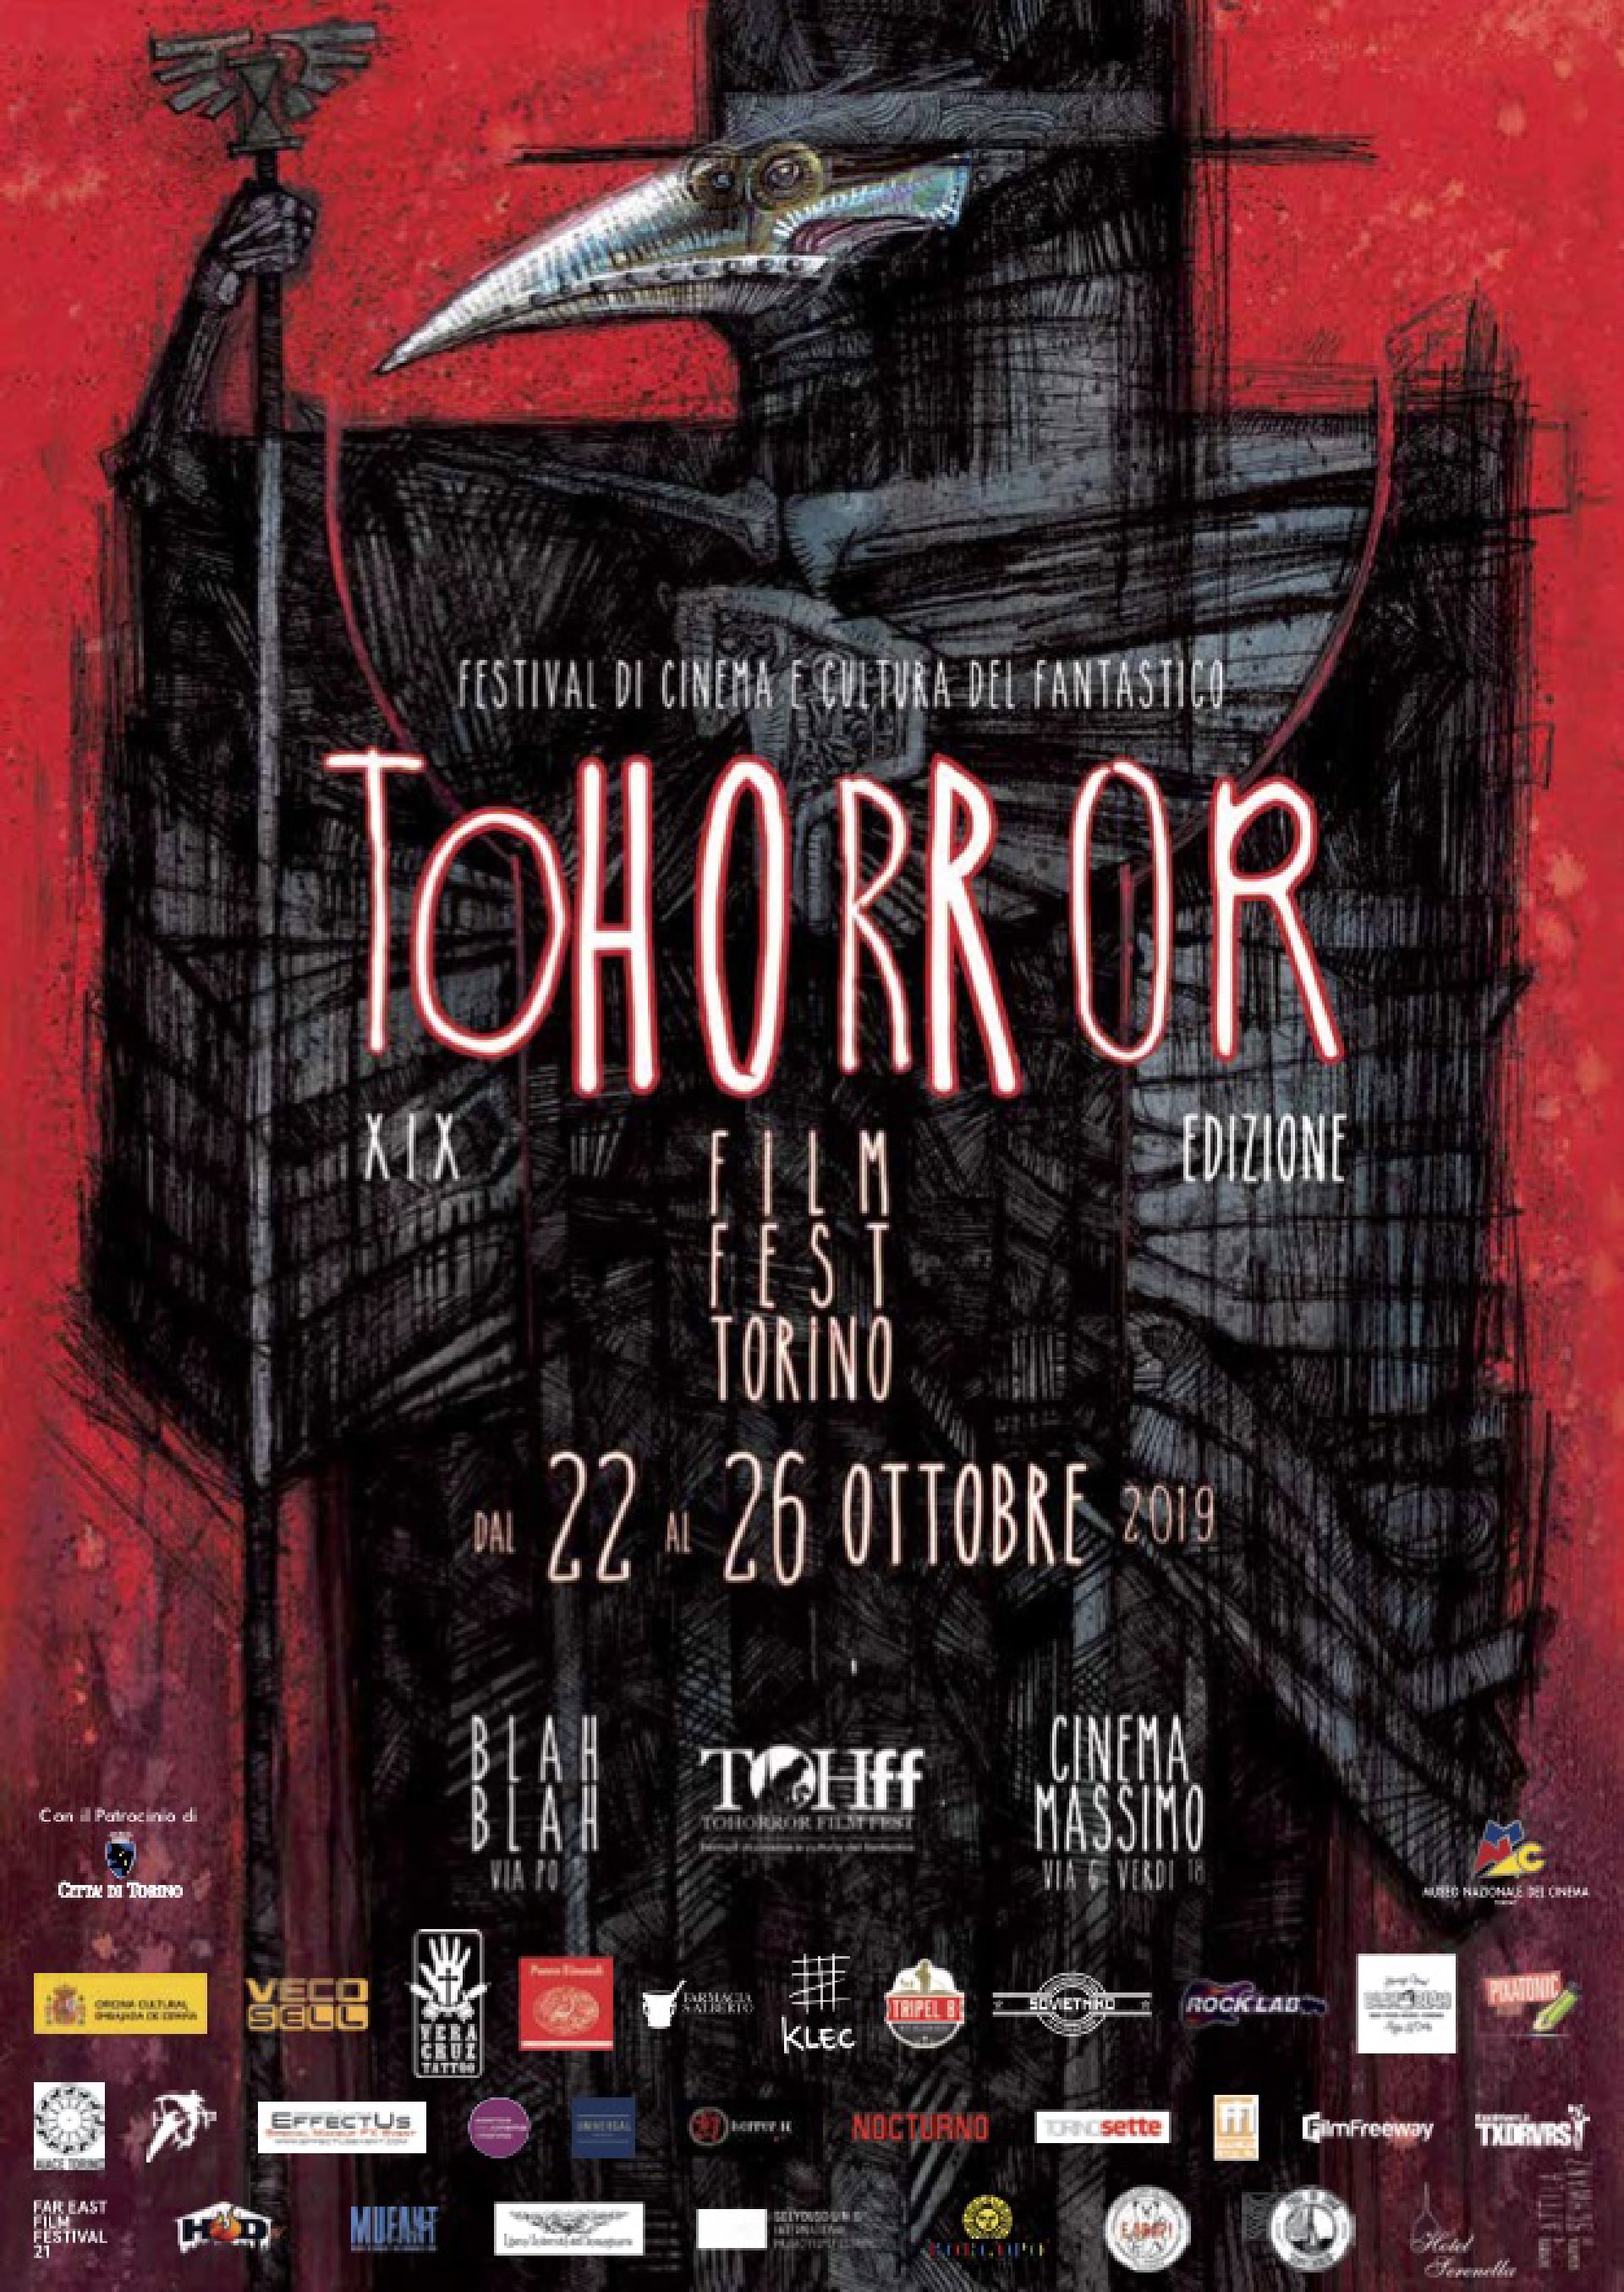 TOHorror Film Fest, cinematographe..it